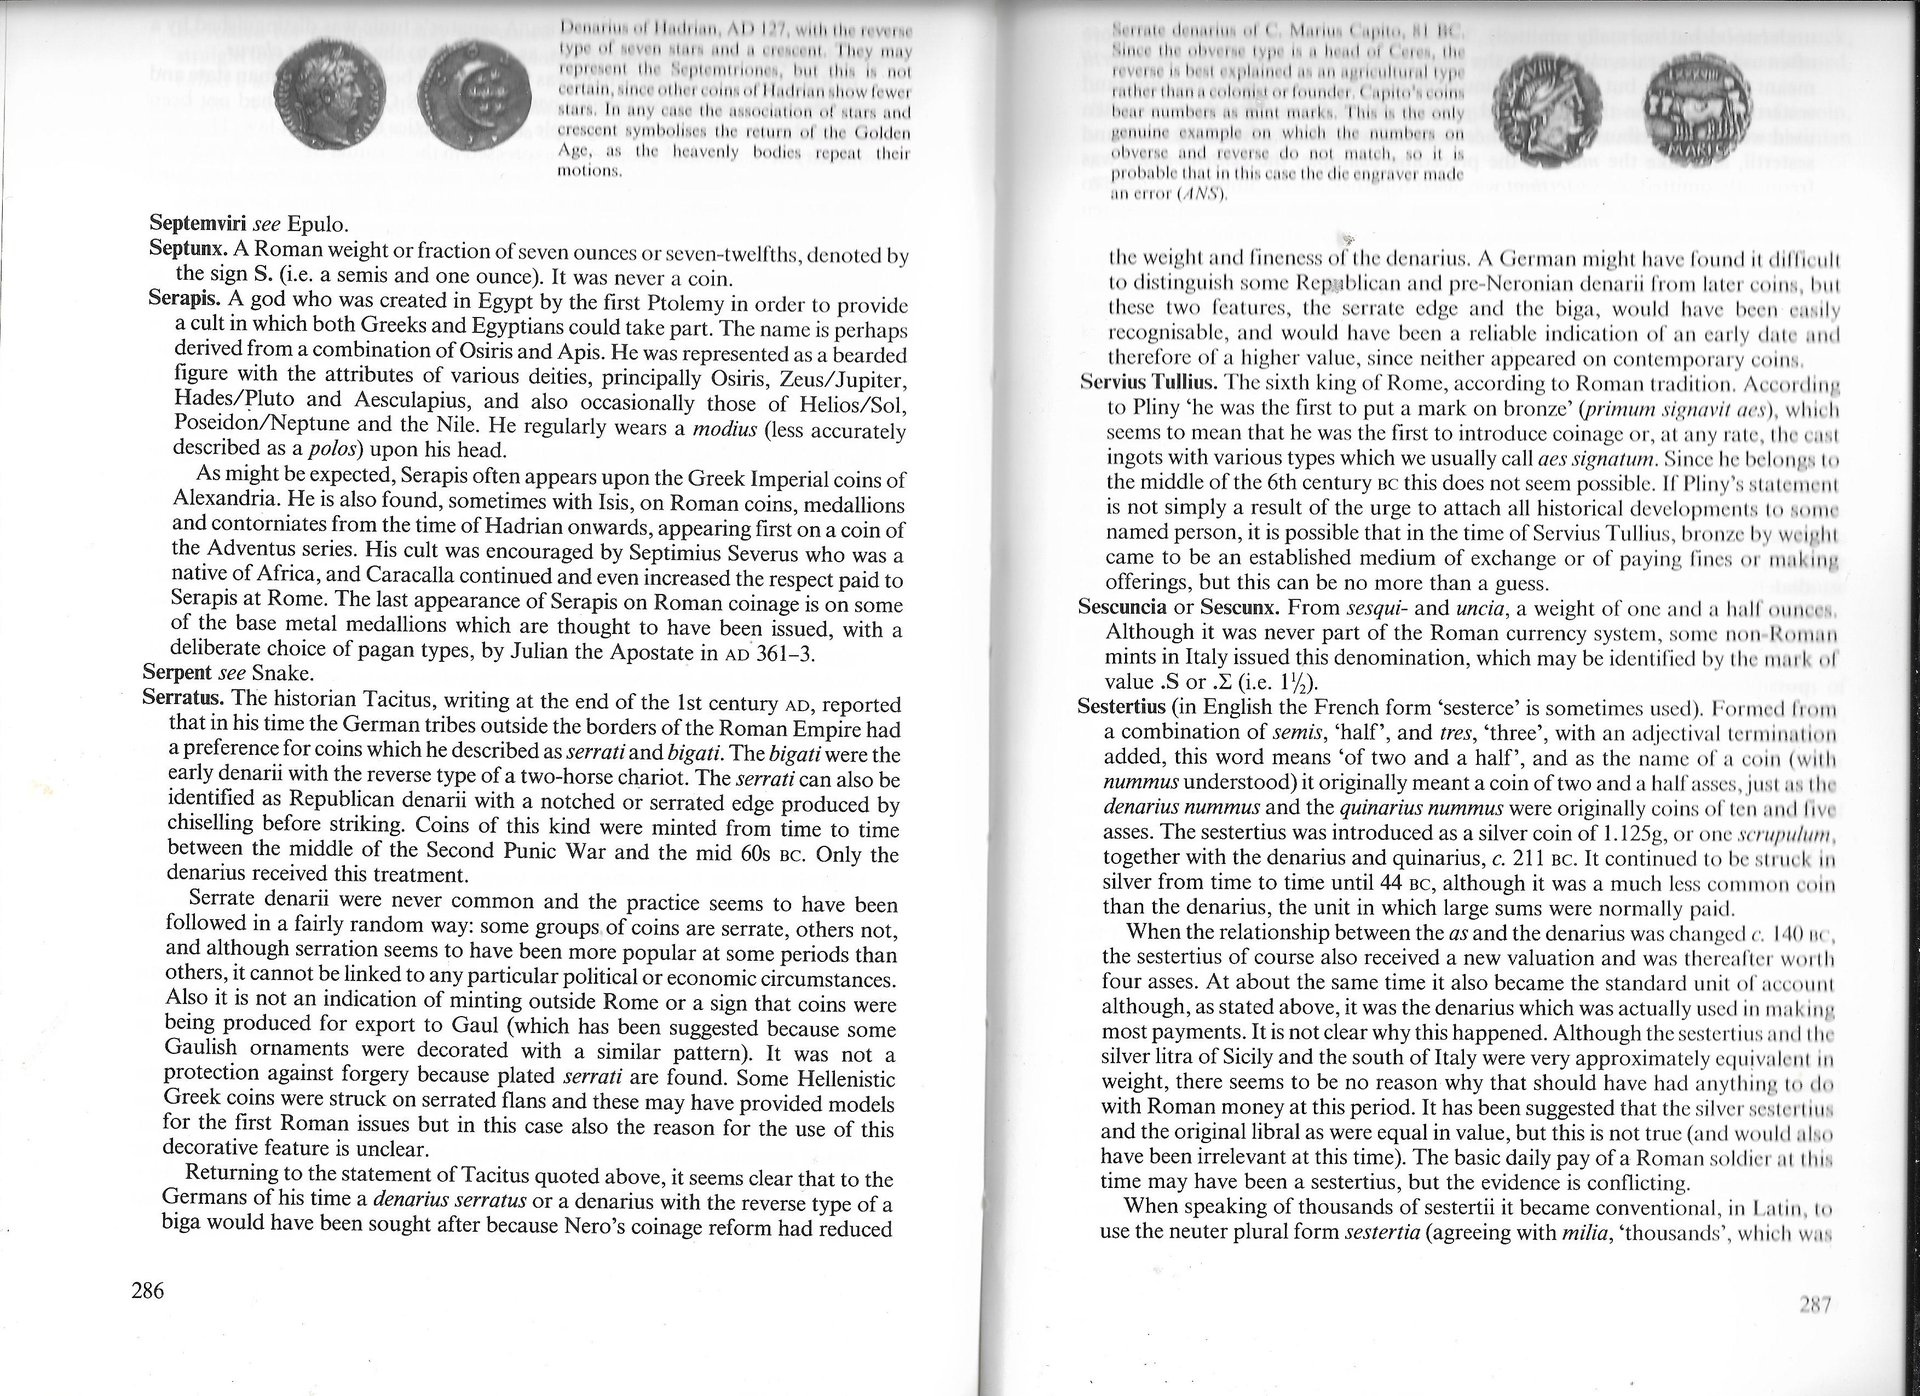 Jones Dictionary of Roman Coins re Serrate Coins.jpg